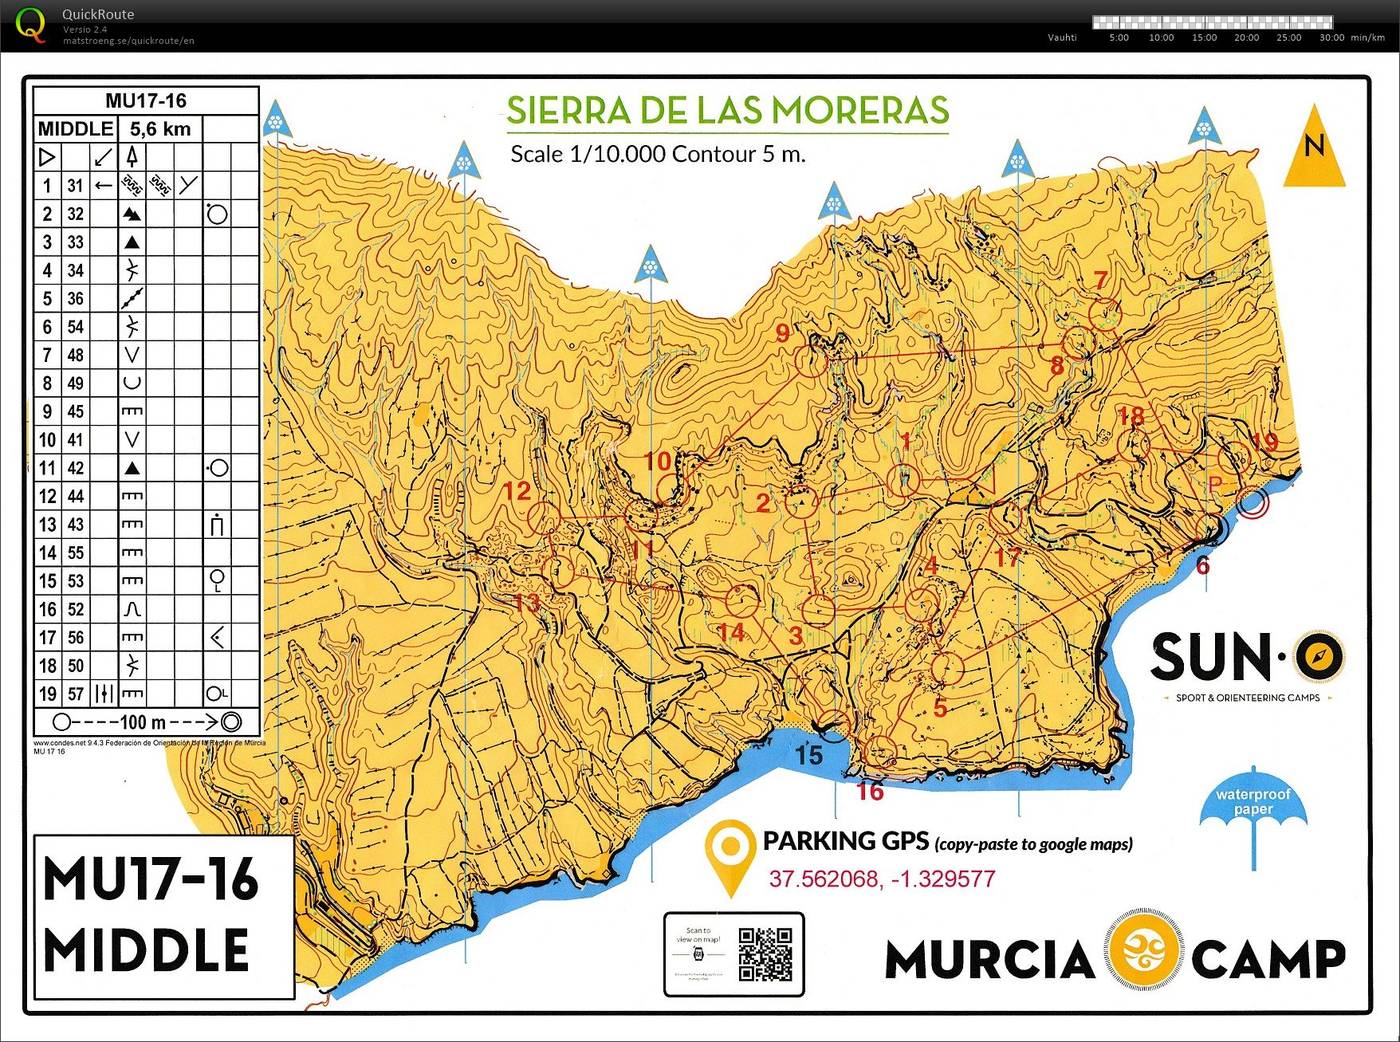 Sierra De Las Moreras MU17-16 (15/02/2017)